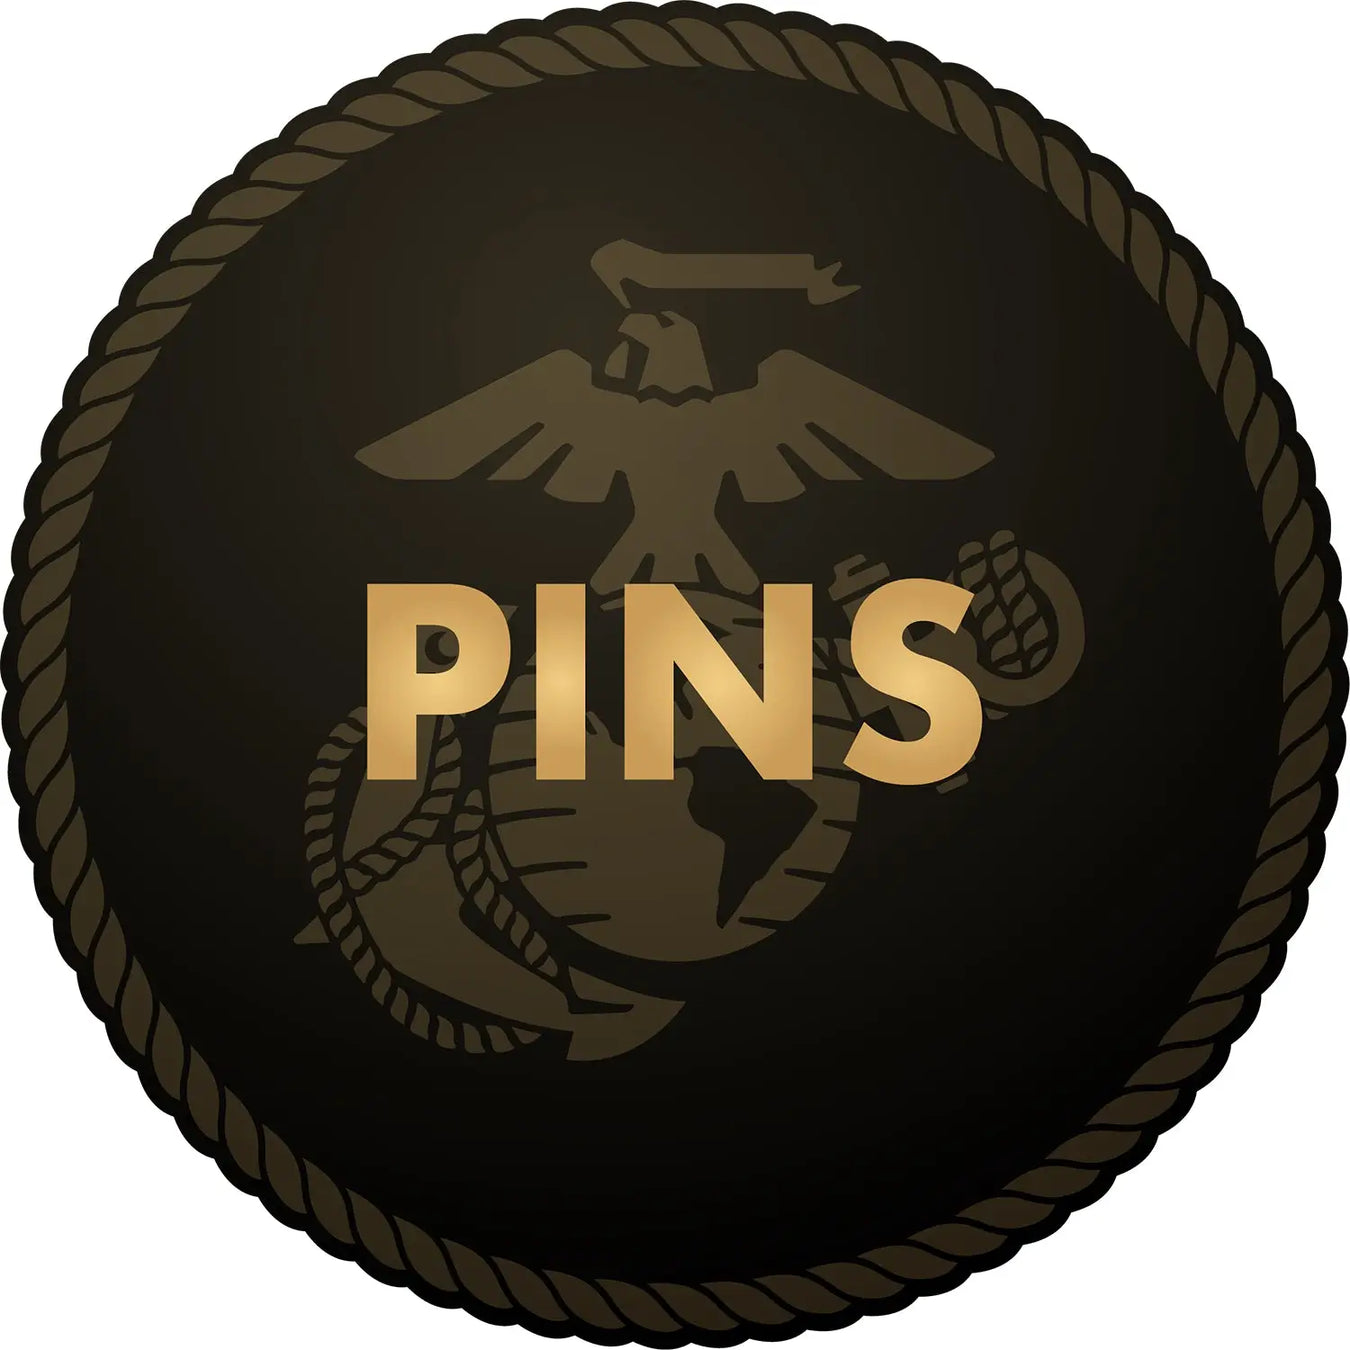 U.S. Marine Corps Pins